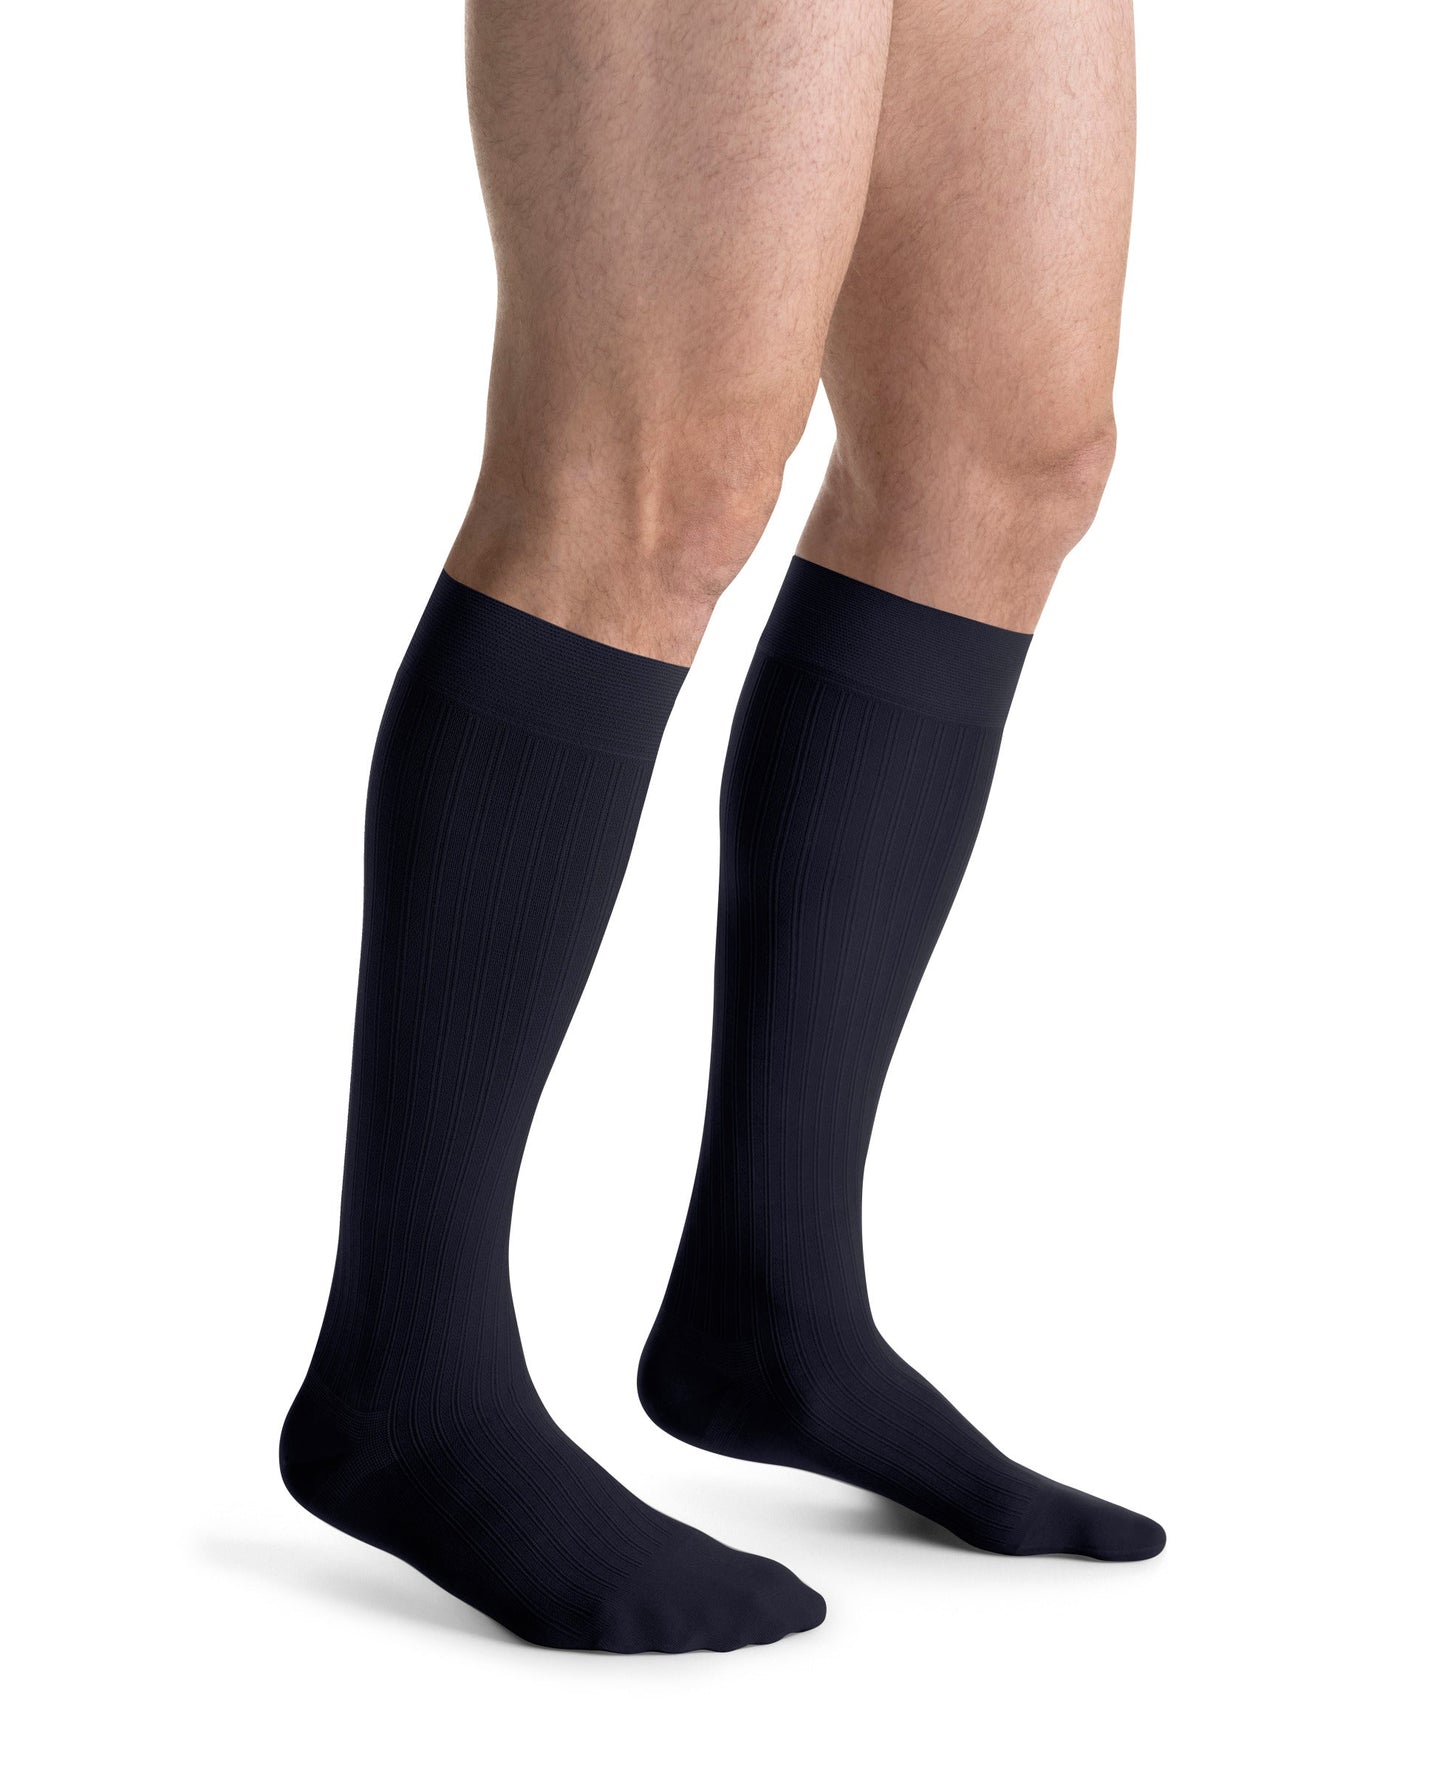 JOBST forMen Ambition Compression Socks 20-30 mmHg Knee High SoftFit Closed Toe